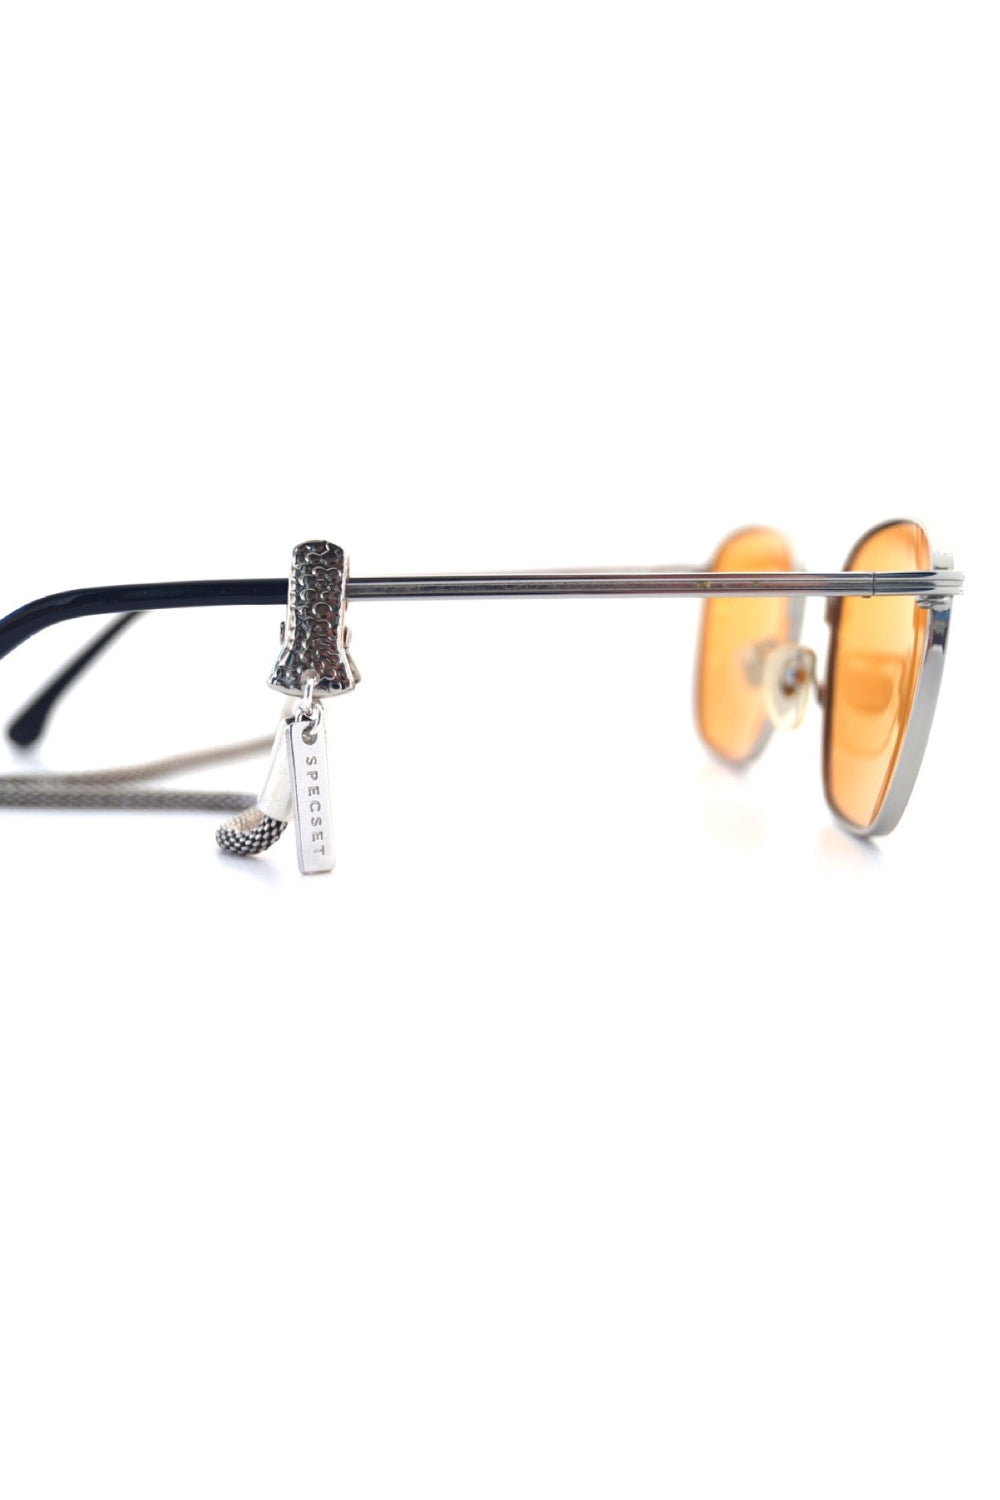 SNAKE IT - Unisex Snakeskin Eyewear Chain - Silver | SPECSET